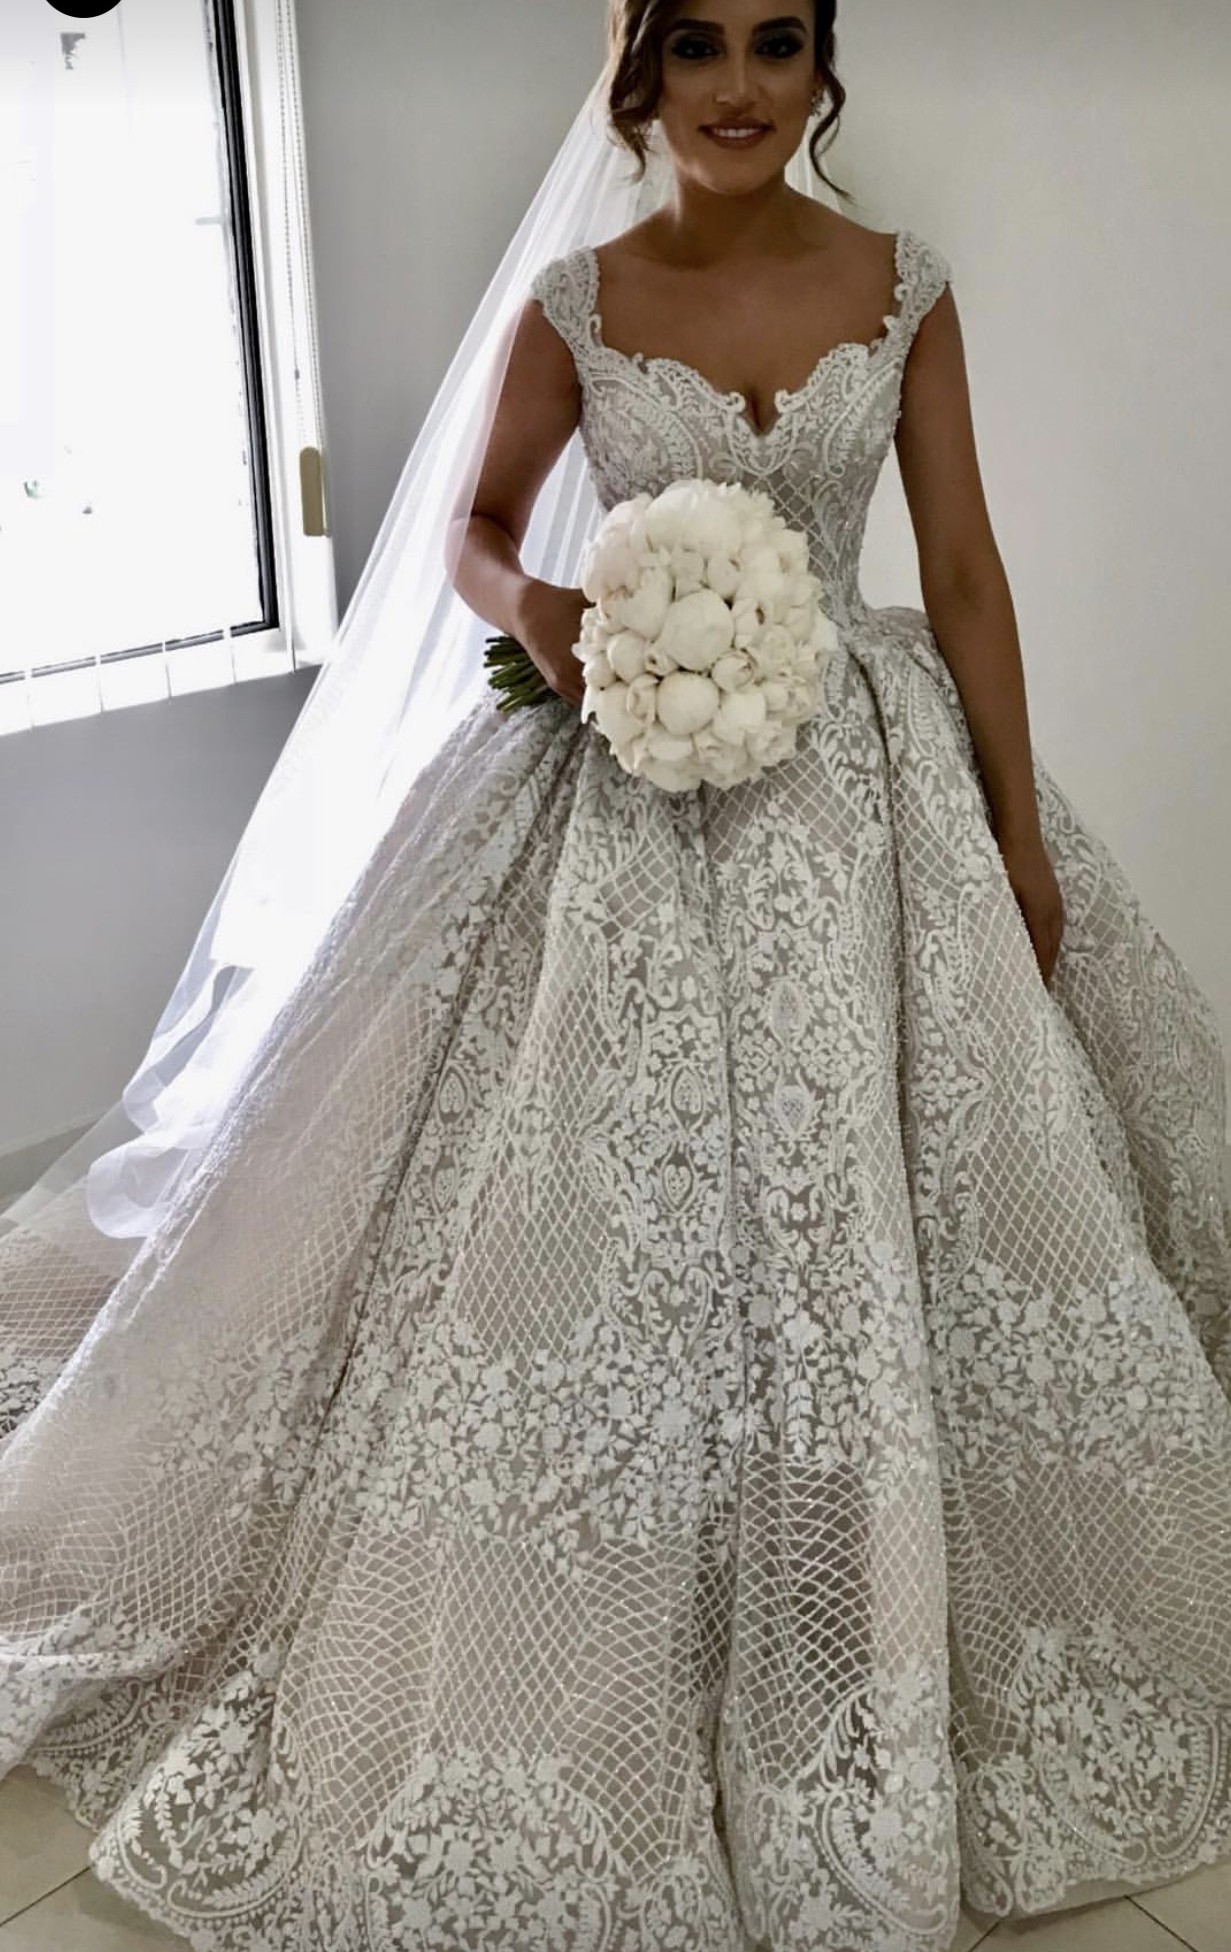 andhra style wedding dress up